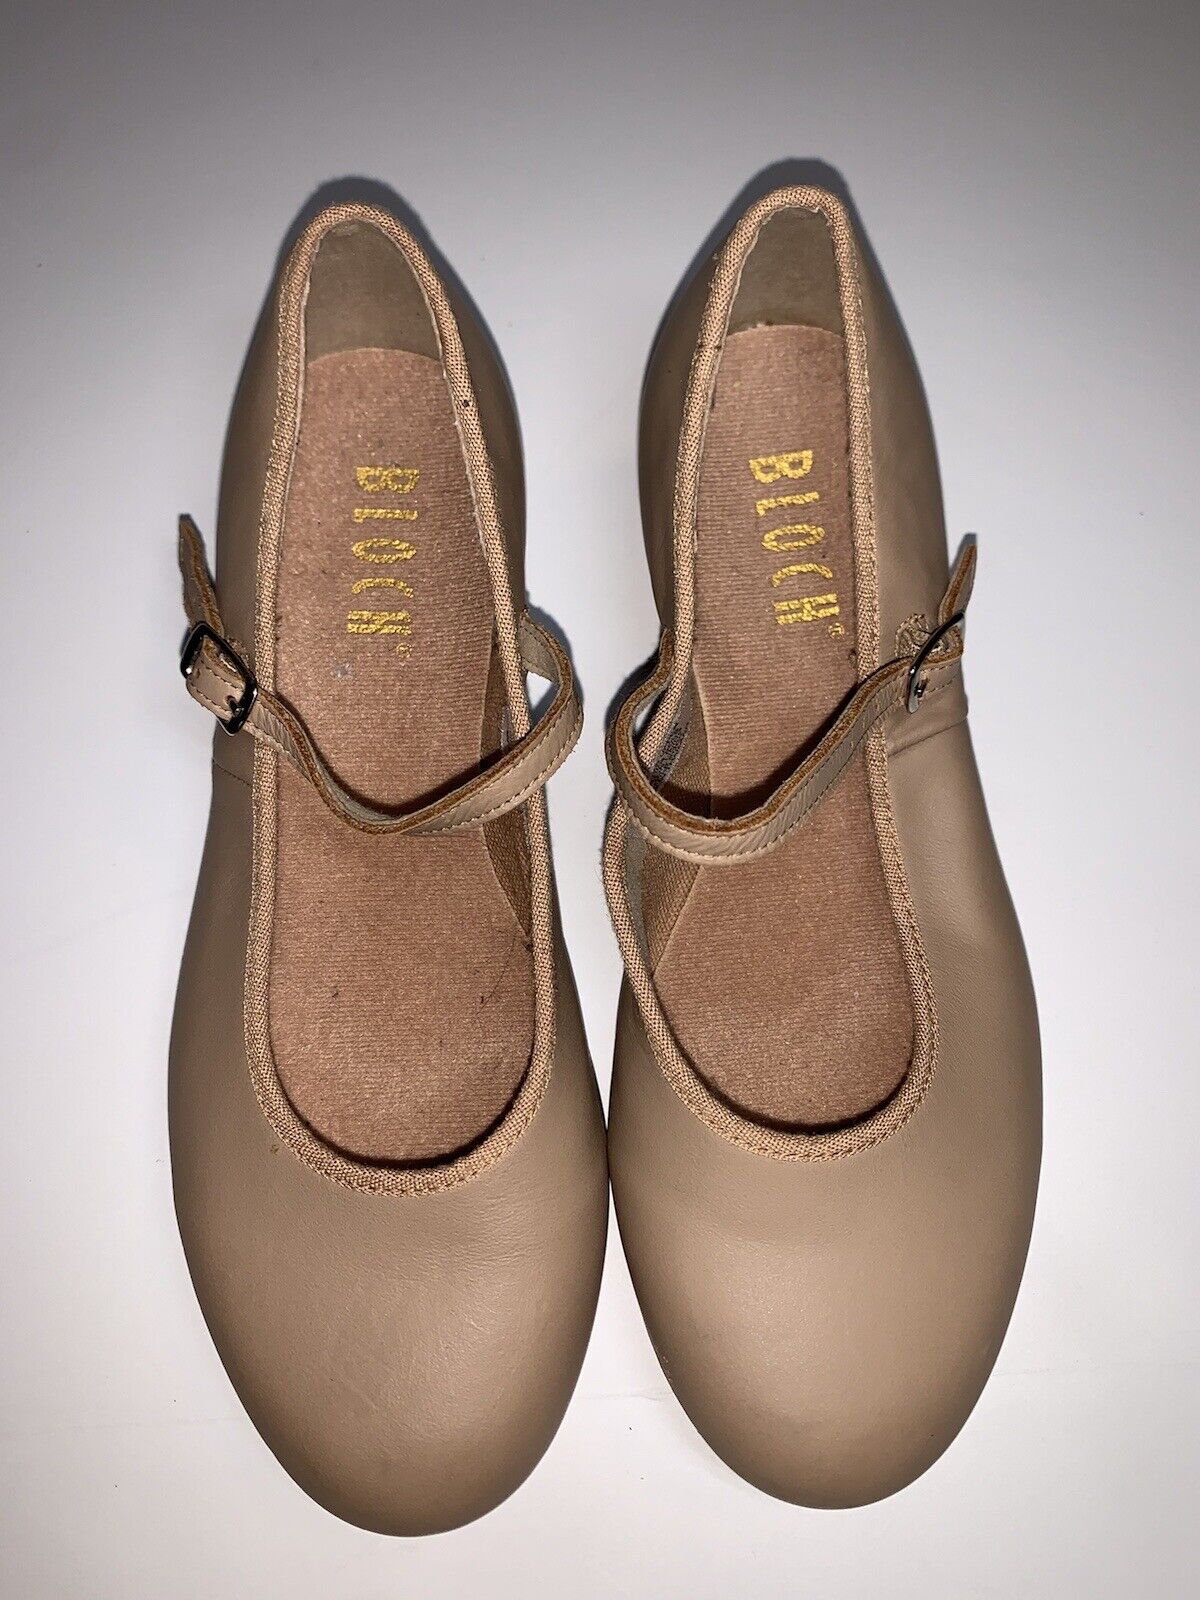 Bloch Beige Tap Shoes . Size 7